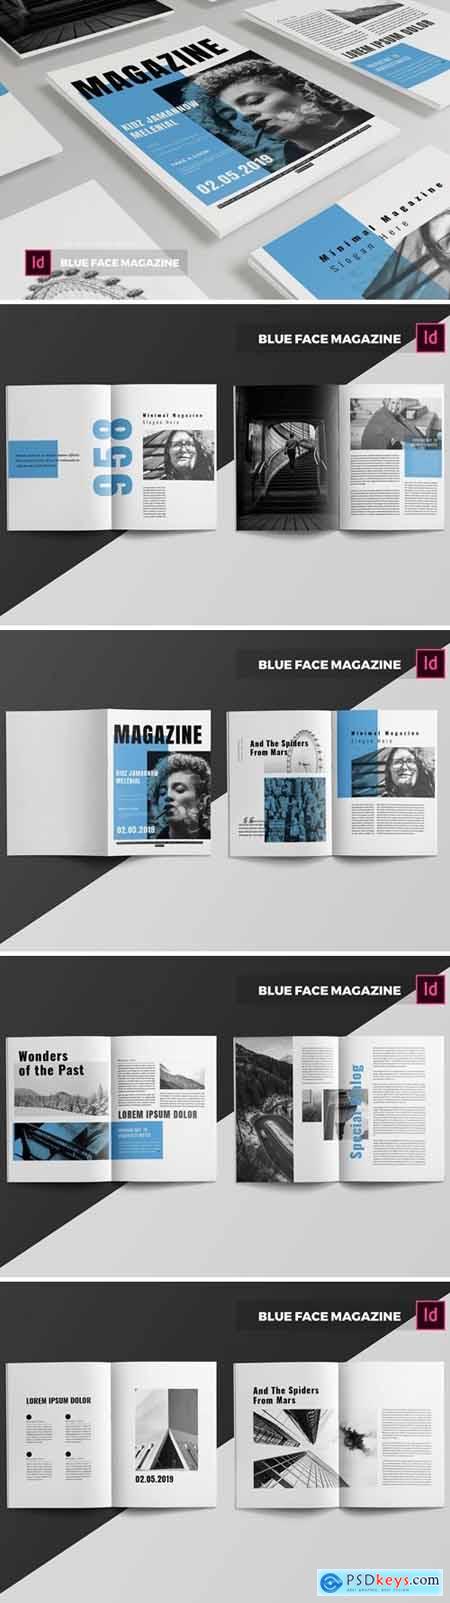 Blue Face Magazine Template